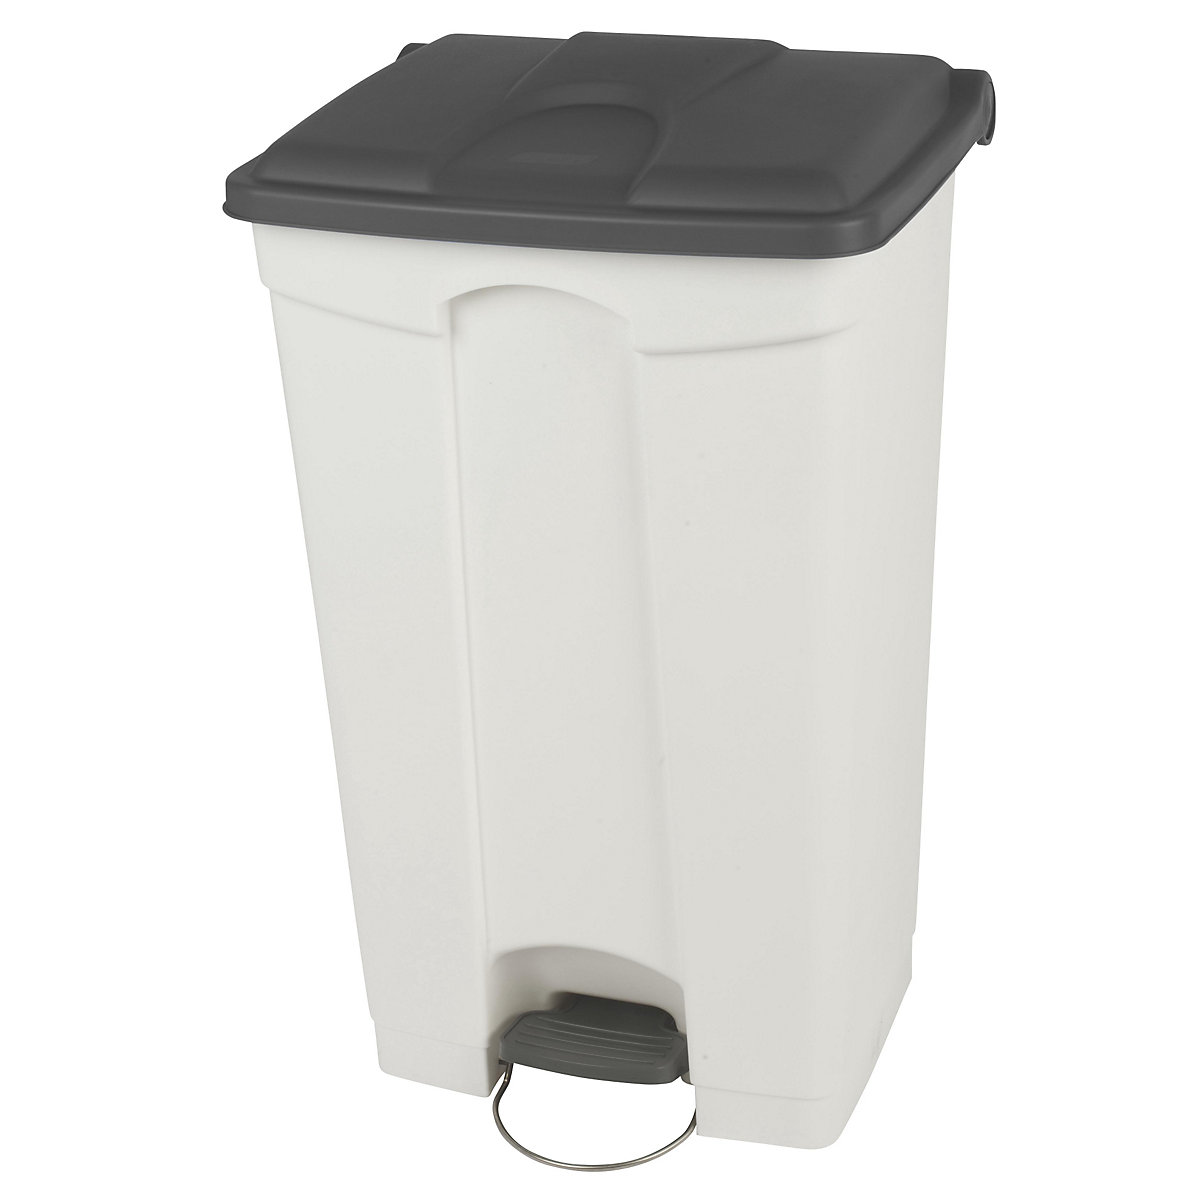 EUROKRAFTbasic – Pedal waste collector, capacity 90 l, WxHxD 505 x 790 x 410 mm, white, grey lid